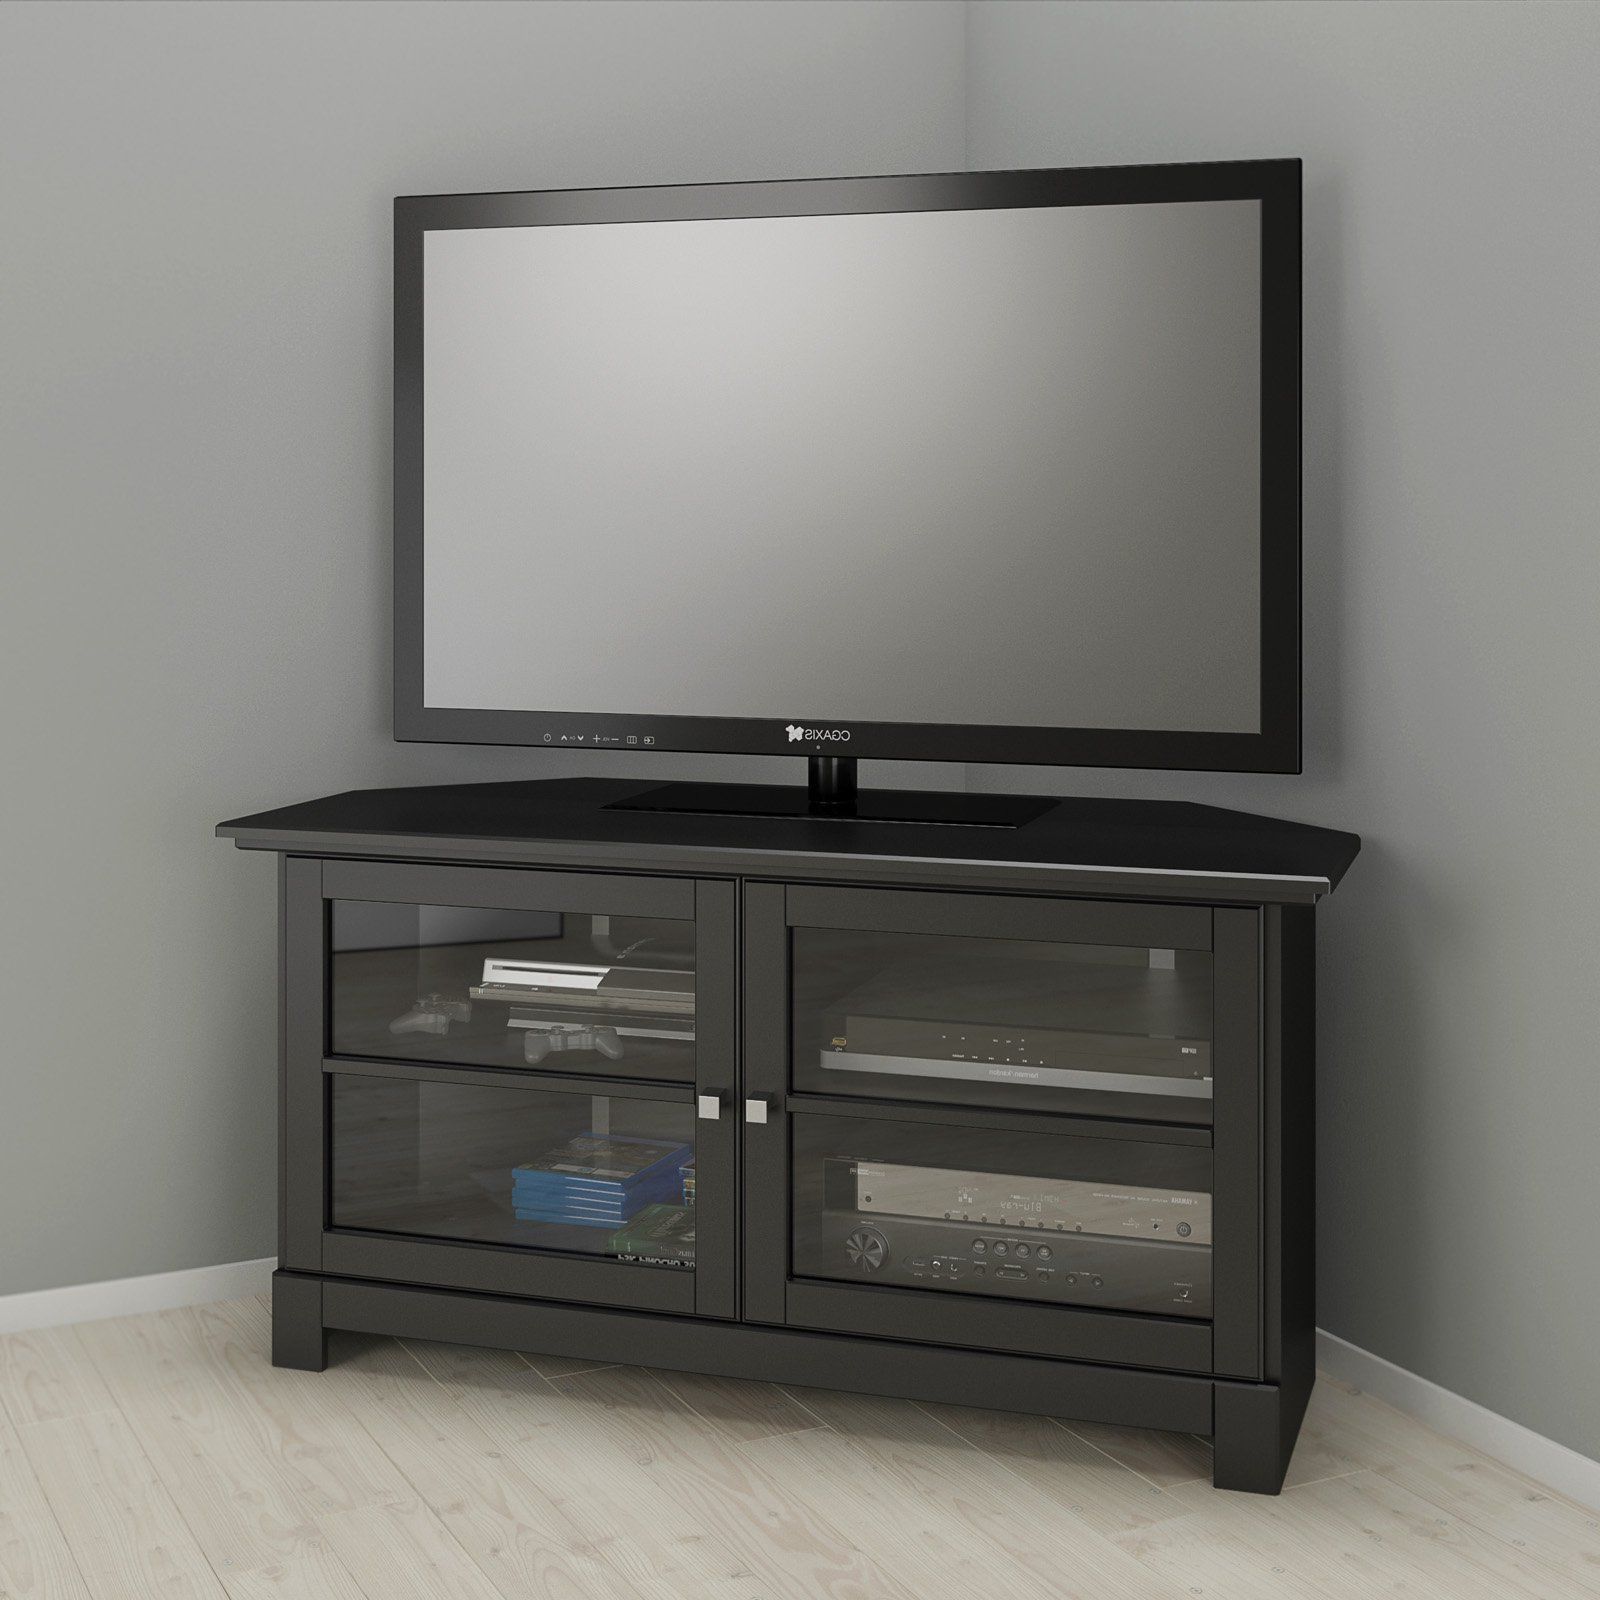 Nexera Pinnacle 49 In. 2 Door Corner Tv Stand – Black With Modern Tv Stands In Oak Wood And Black Accents With Storage Doors (Gallery 5 of 20)